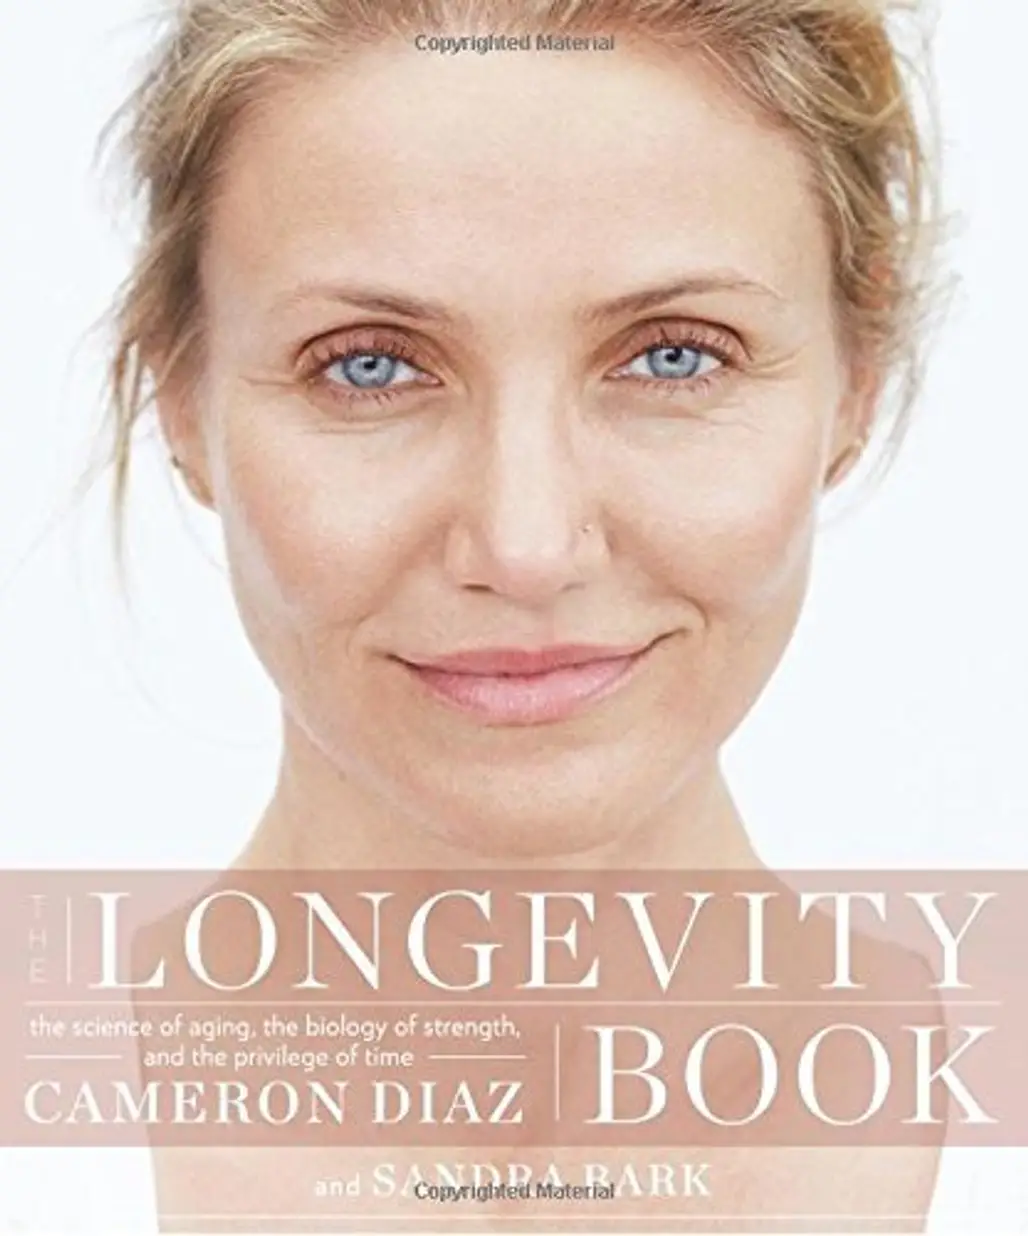 The Longevity Book by Cameron Diaz